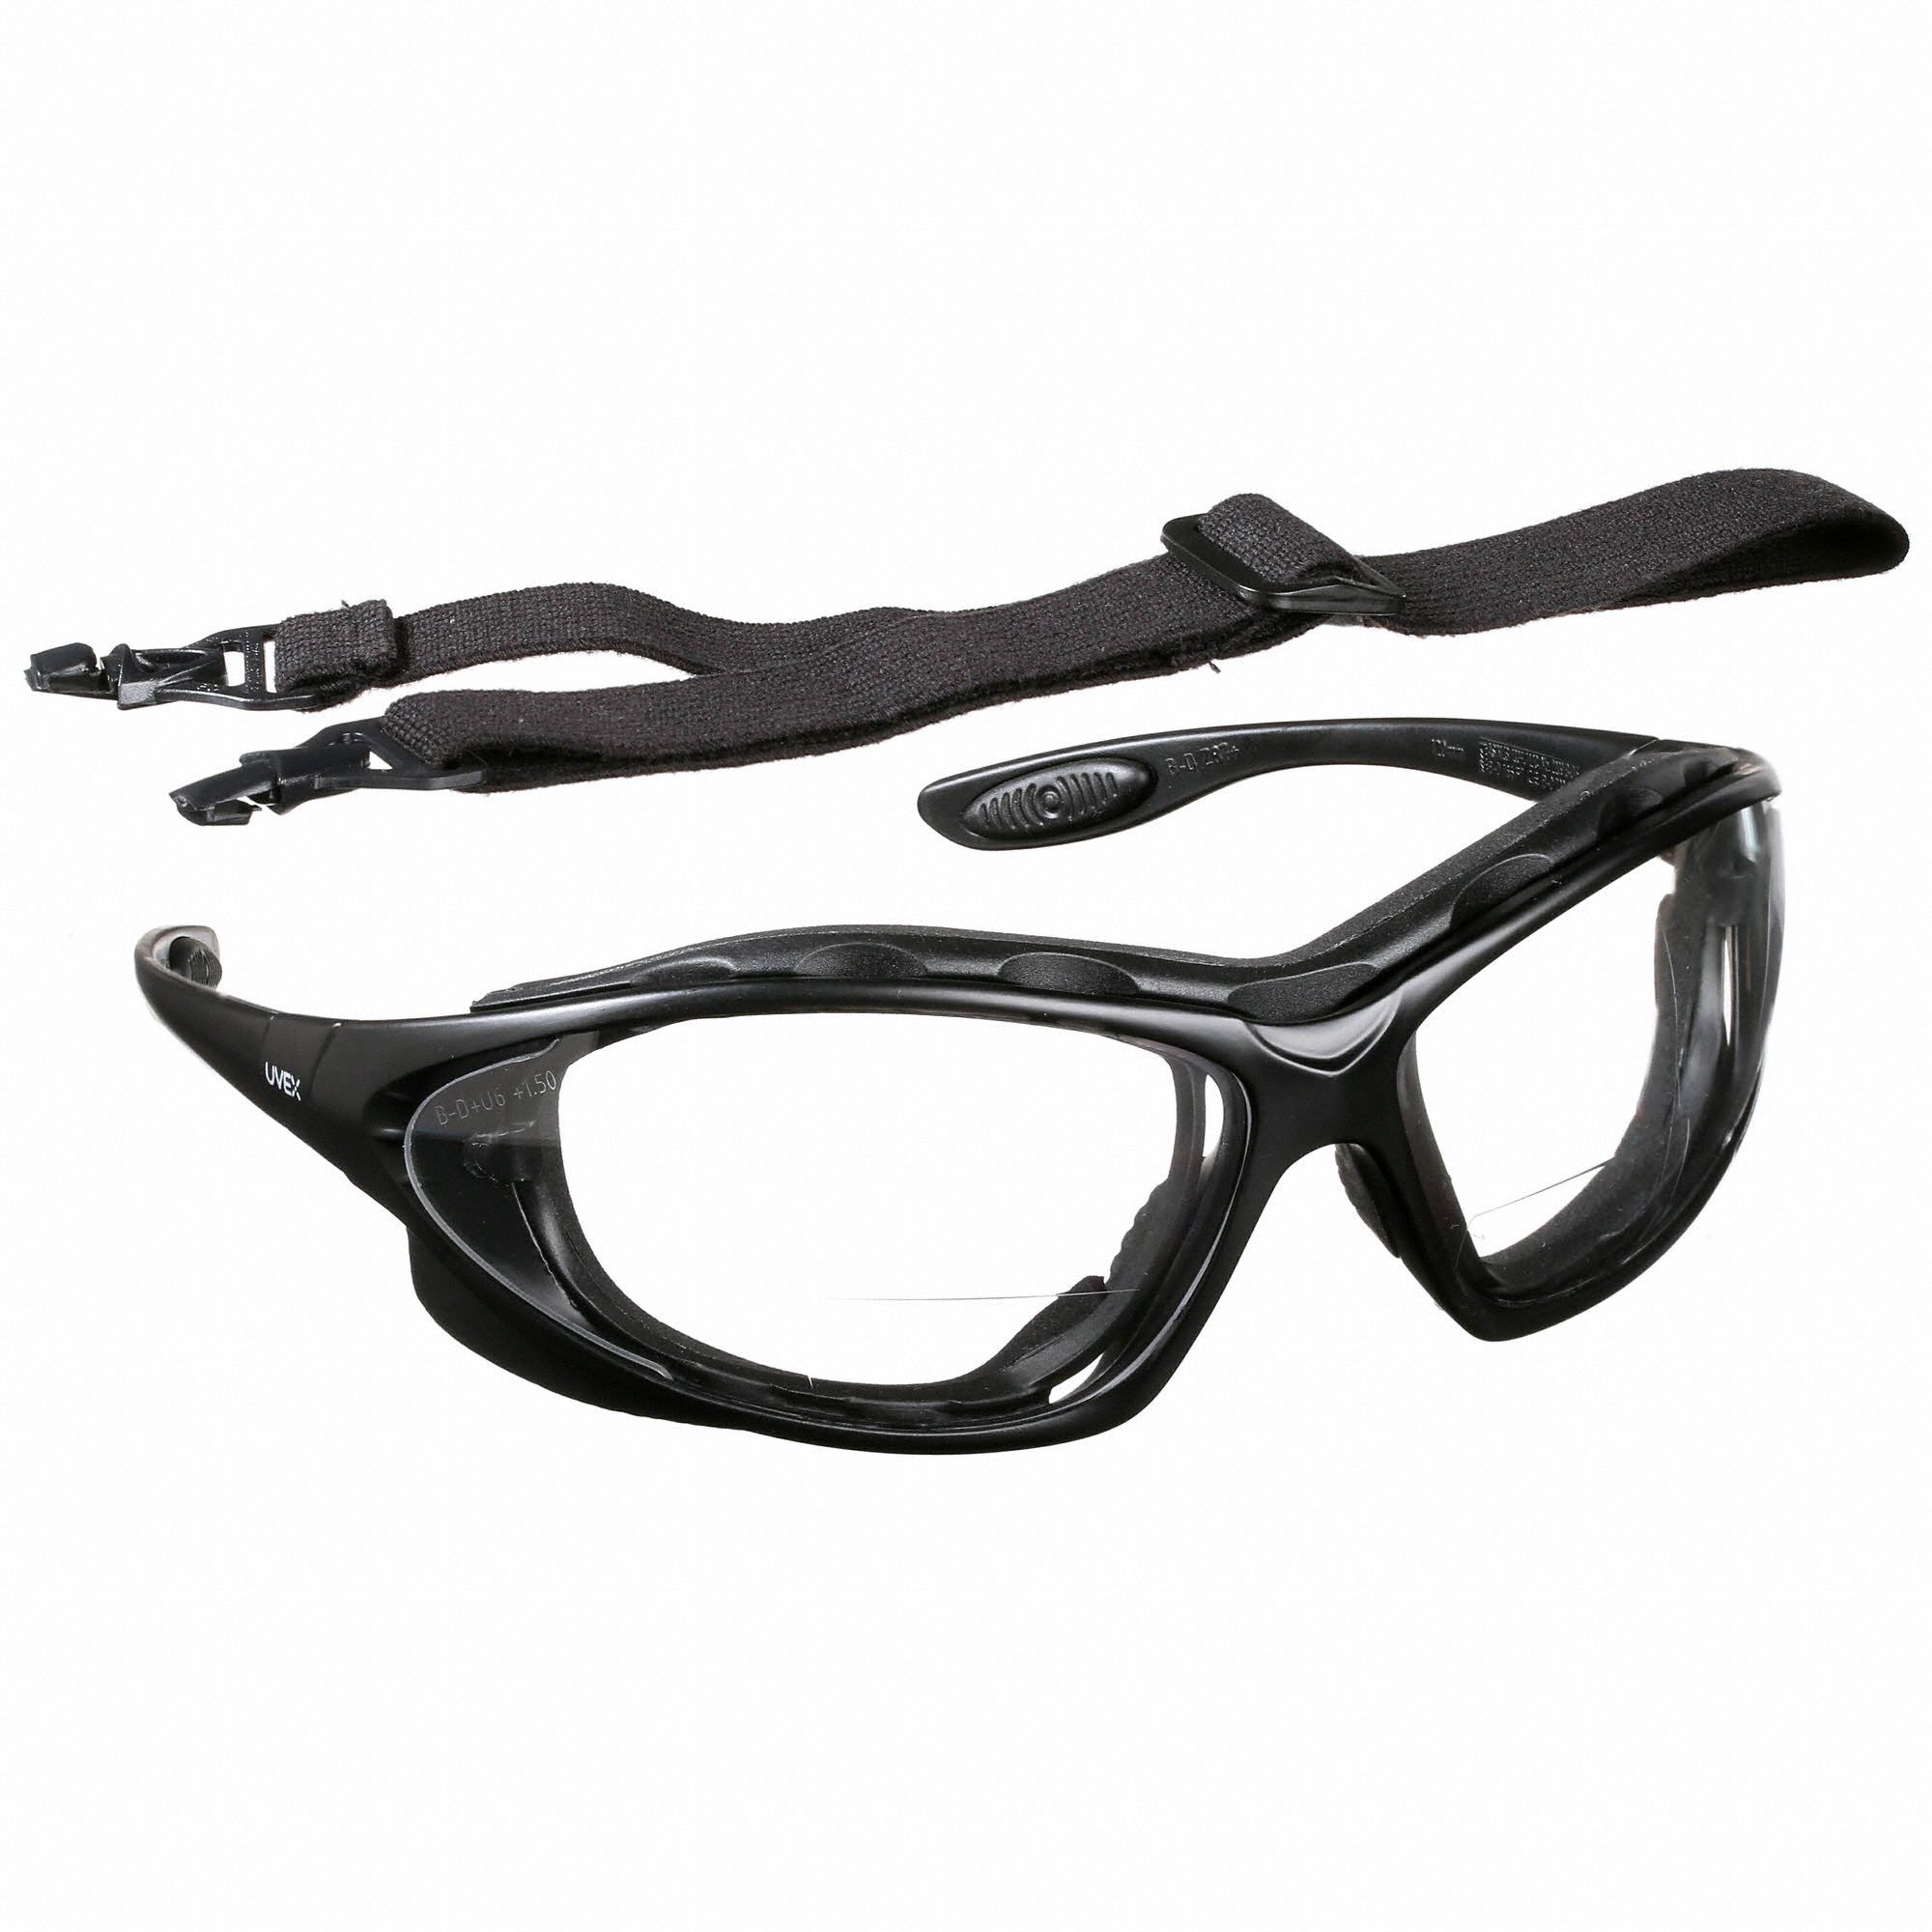 Honeywell Uvex Bifocal Safety Reading Glasses Anti Fog Eye Socket Foam Lining Wraparound